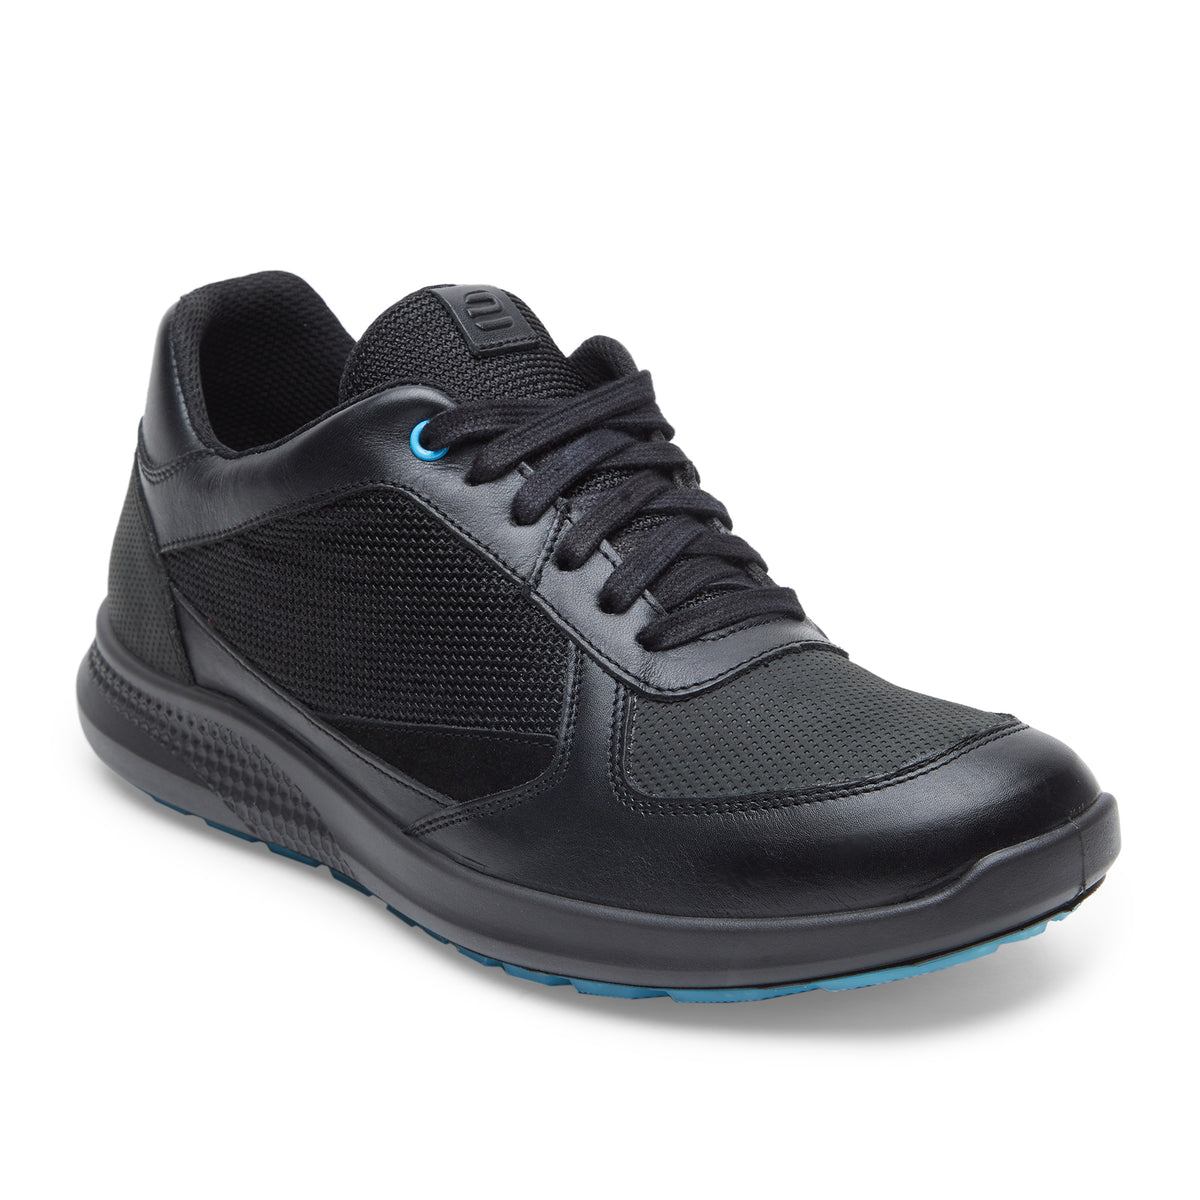 Buy Kansas EK-03 Men Black Casual Shoes | Ergon Style